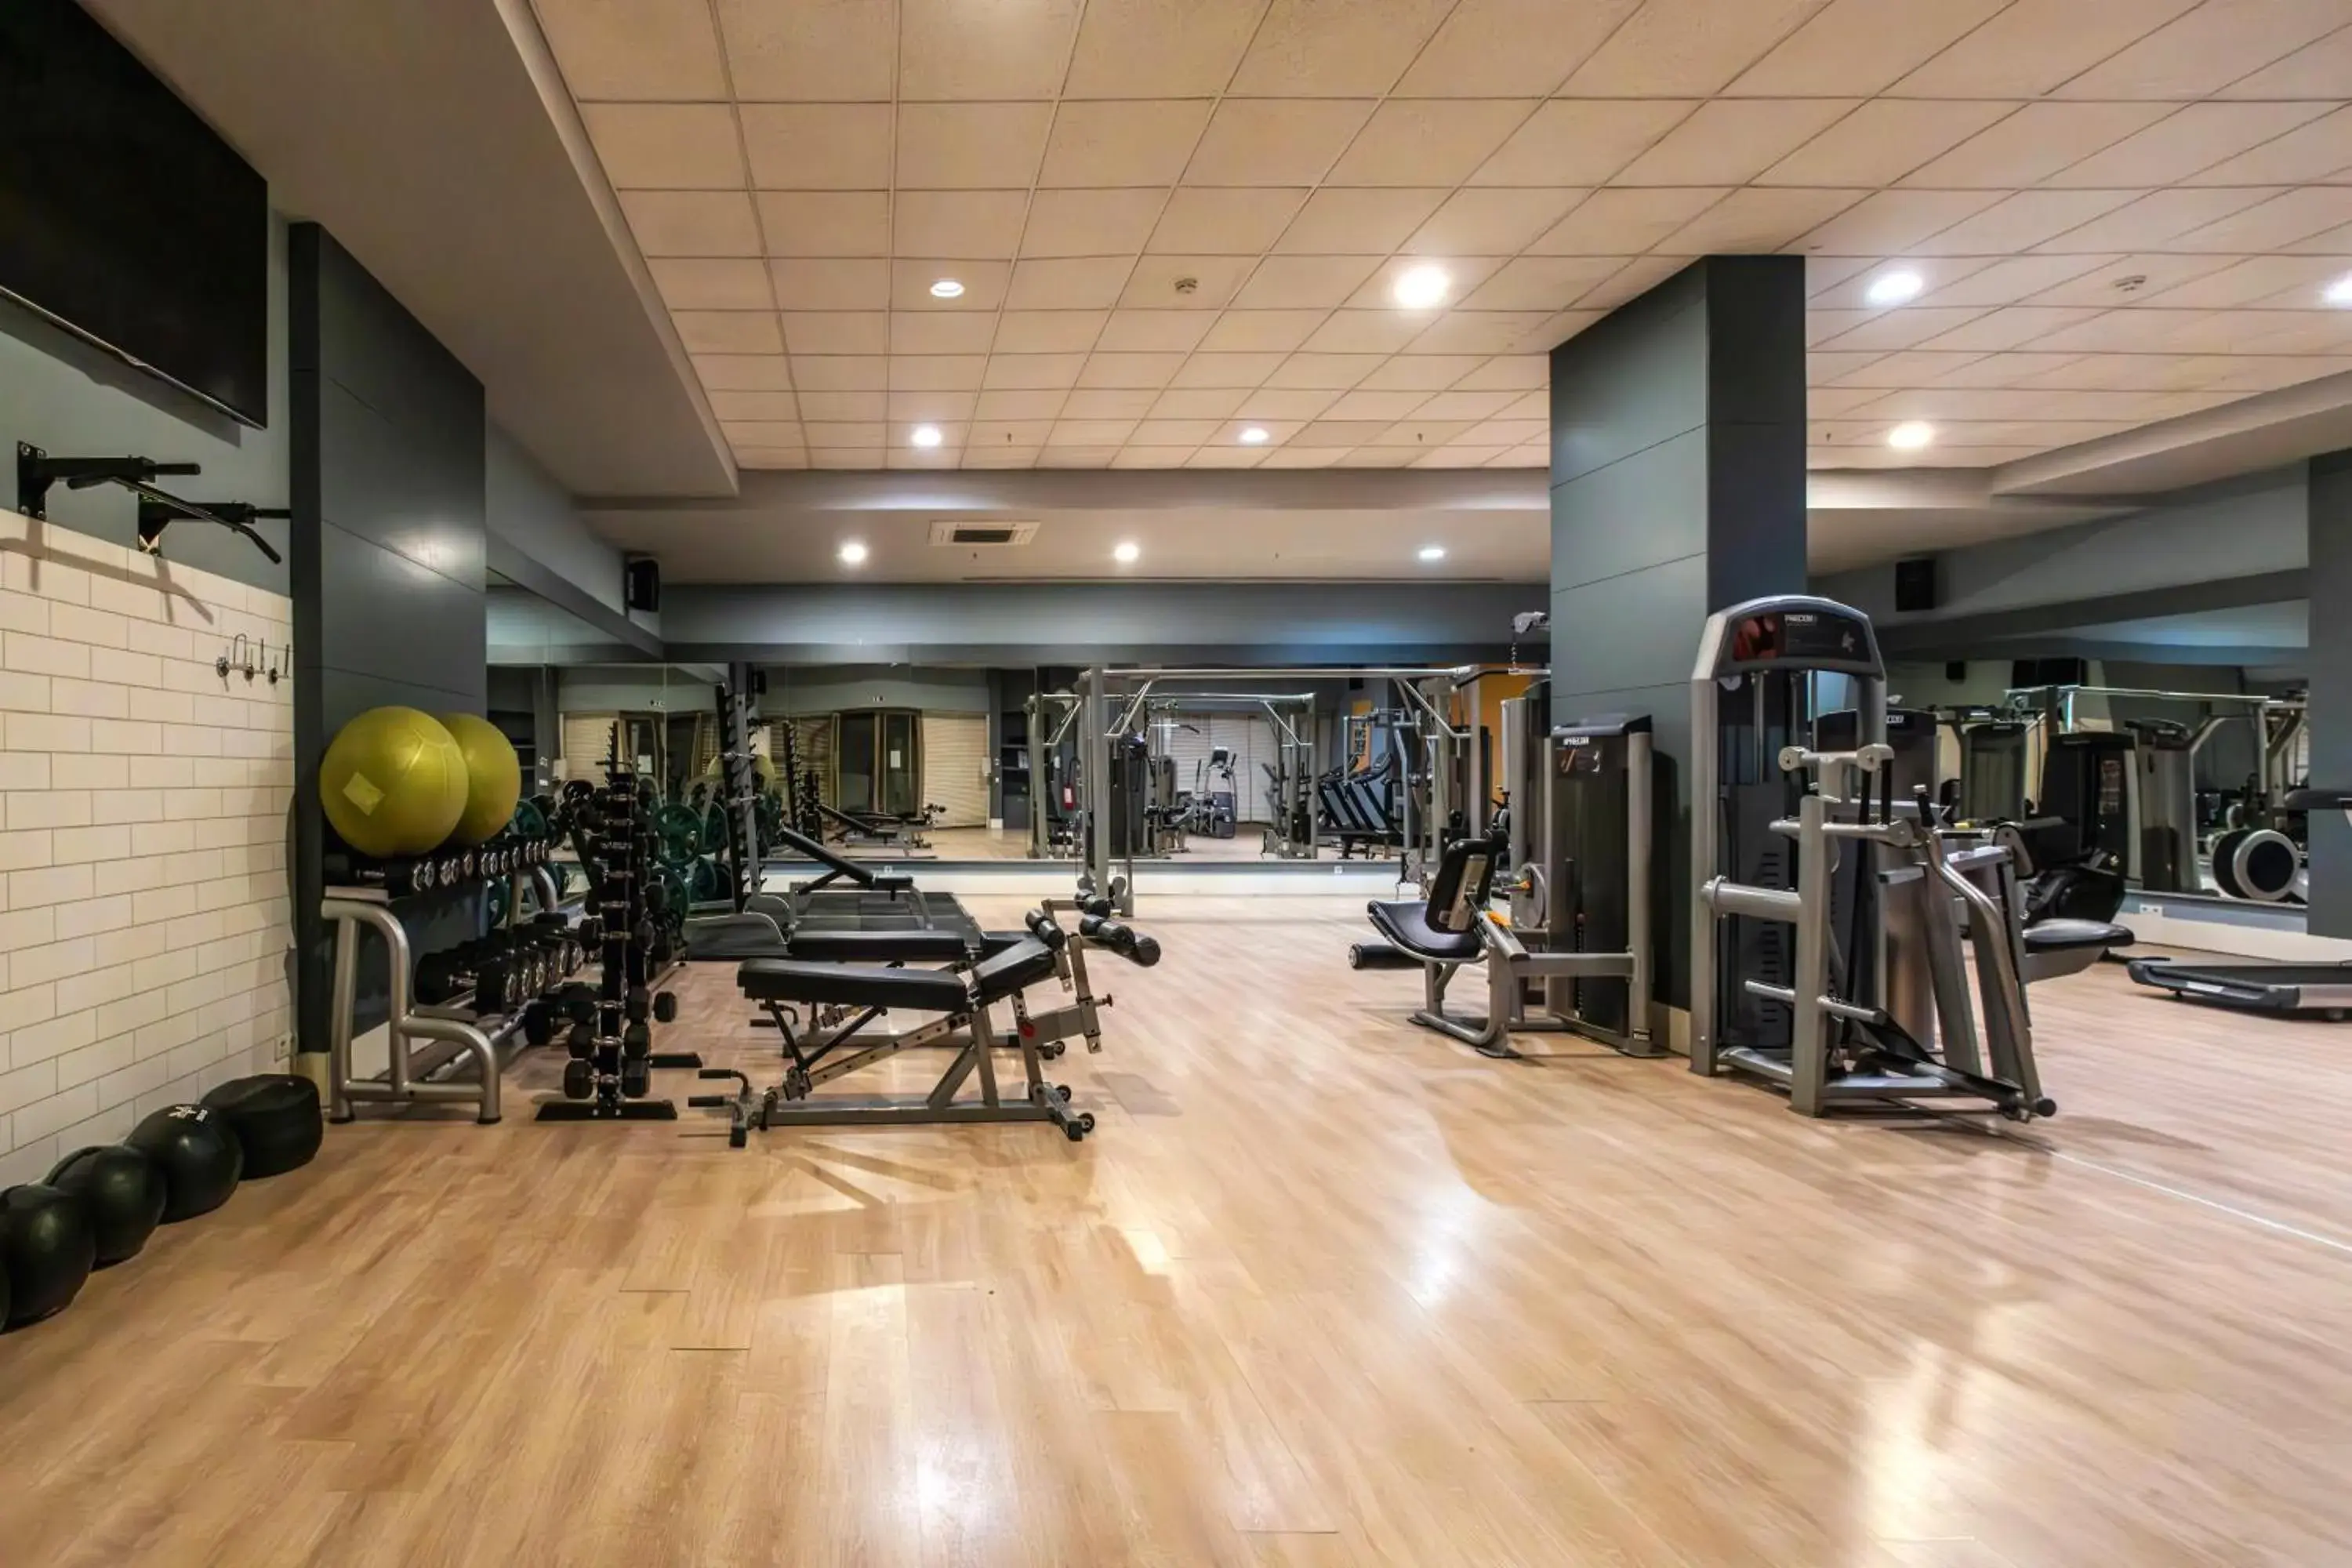 Fitness centre/facilities, Fitness Center/Facilities in Barut GOIA